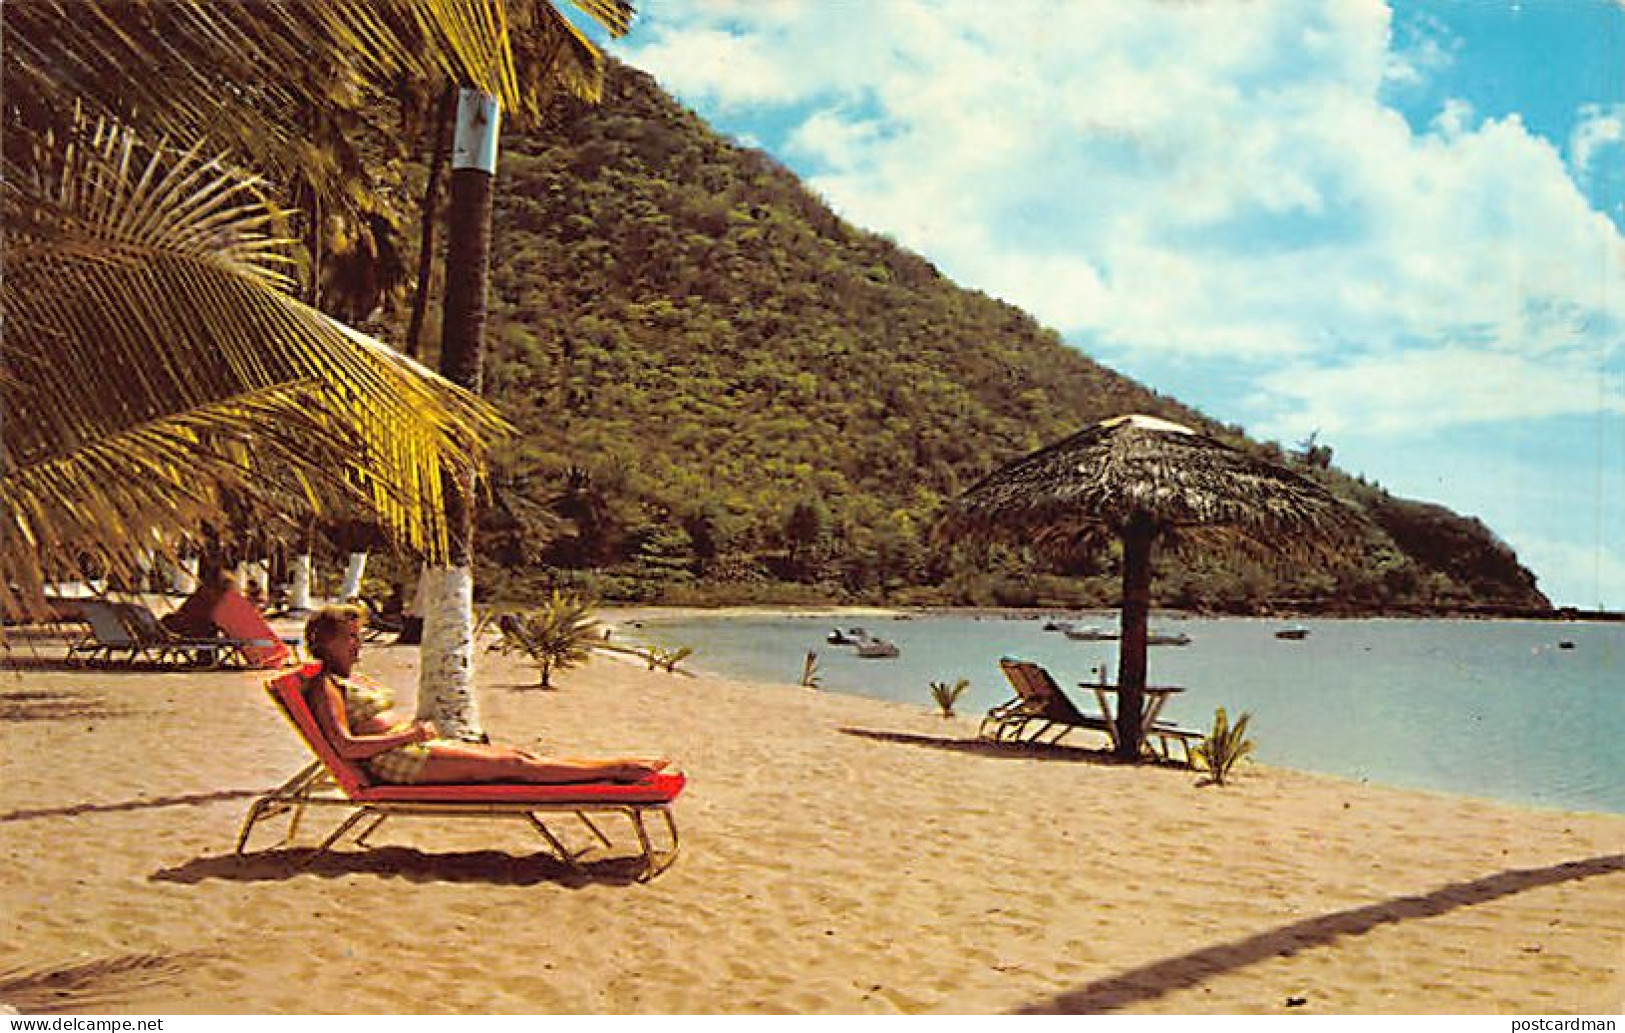 Saint Lucia - Sunbathing Under The Palms On Reduit Beach - Publ. Minvielle & Chastanet Ltd. SL1 - St. Lucia